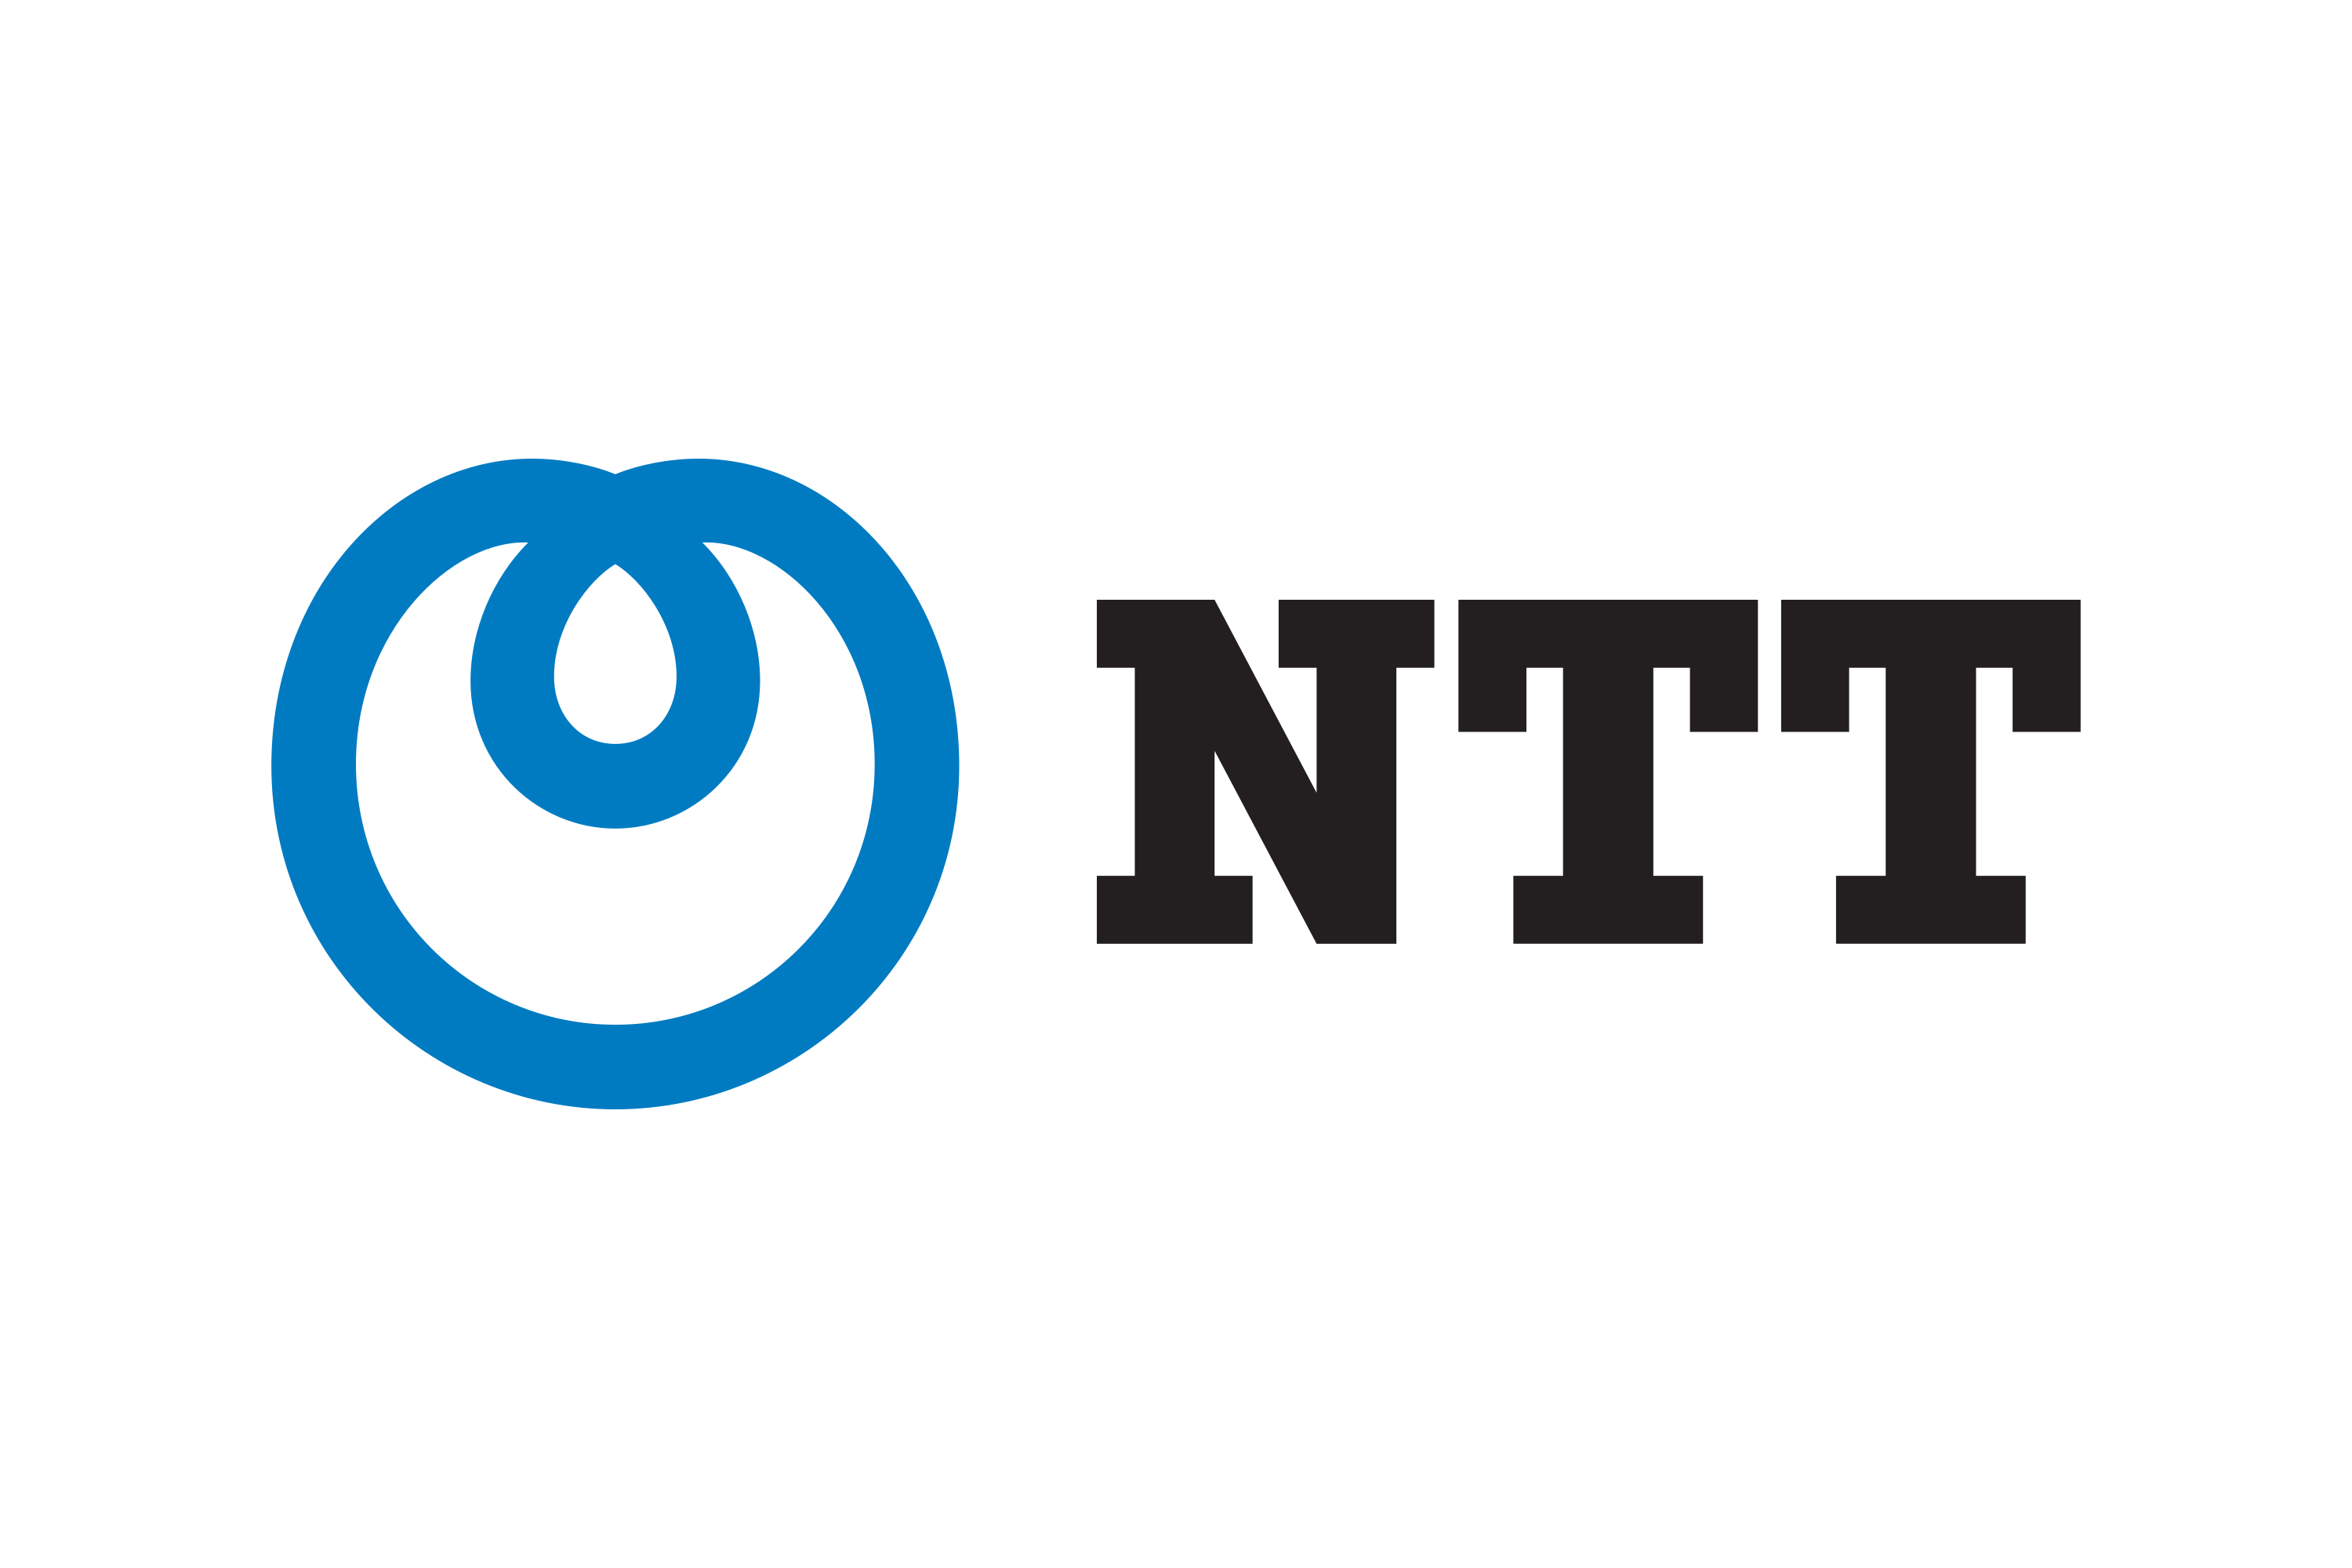 logo NTT